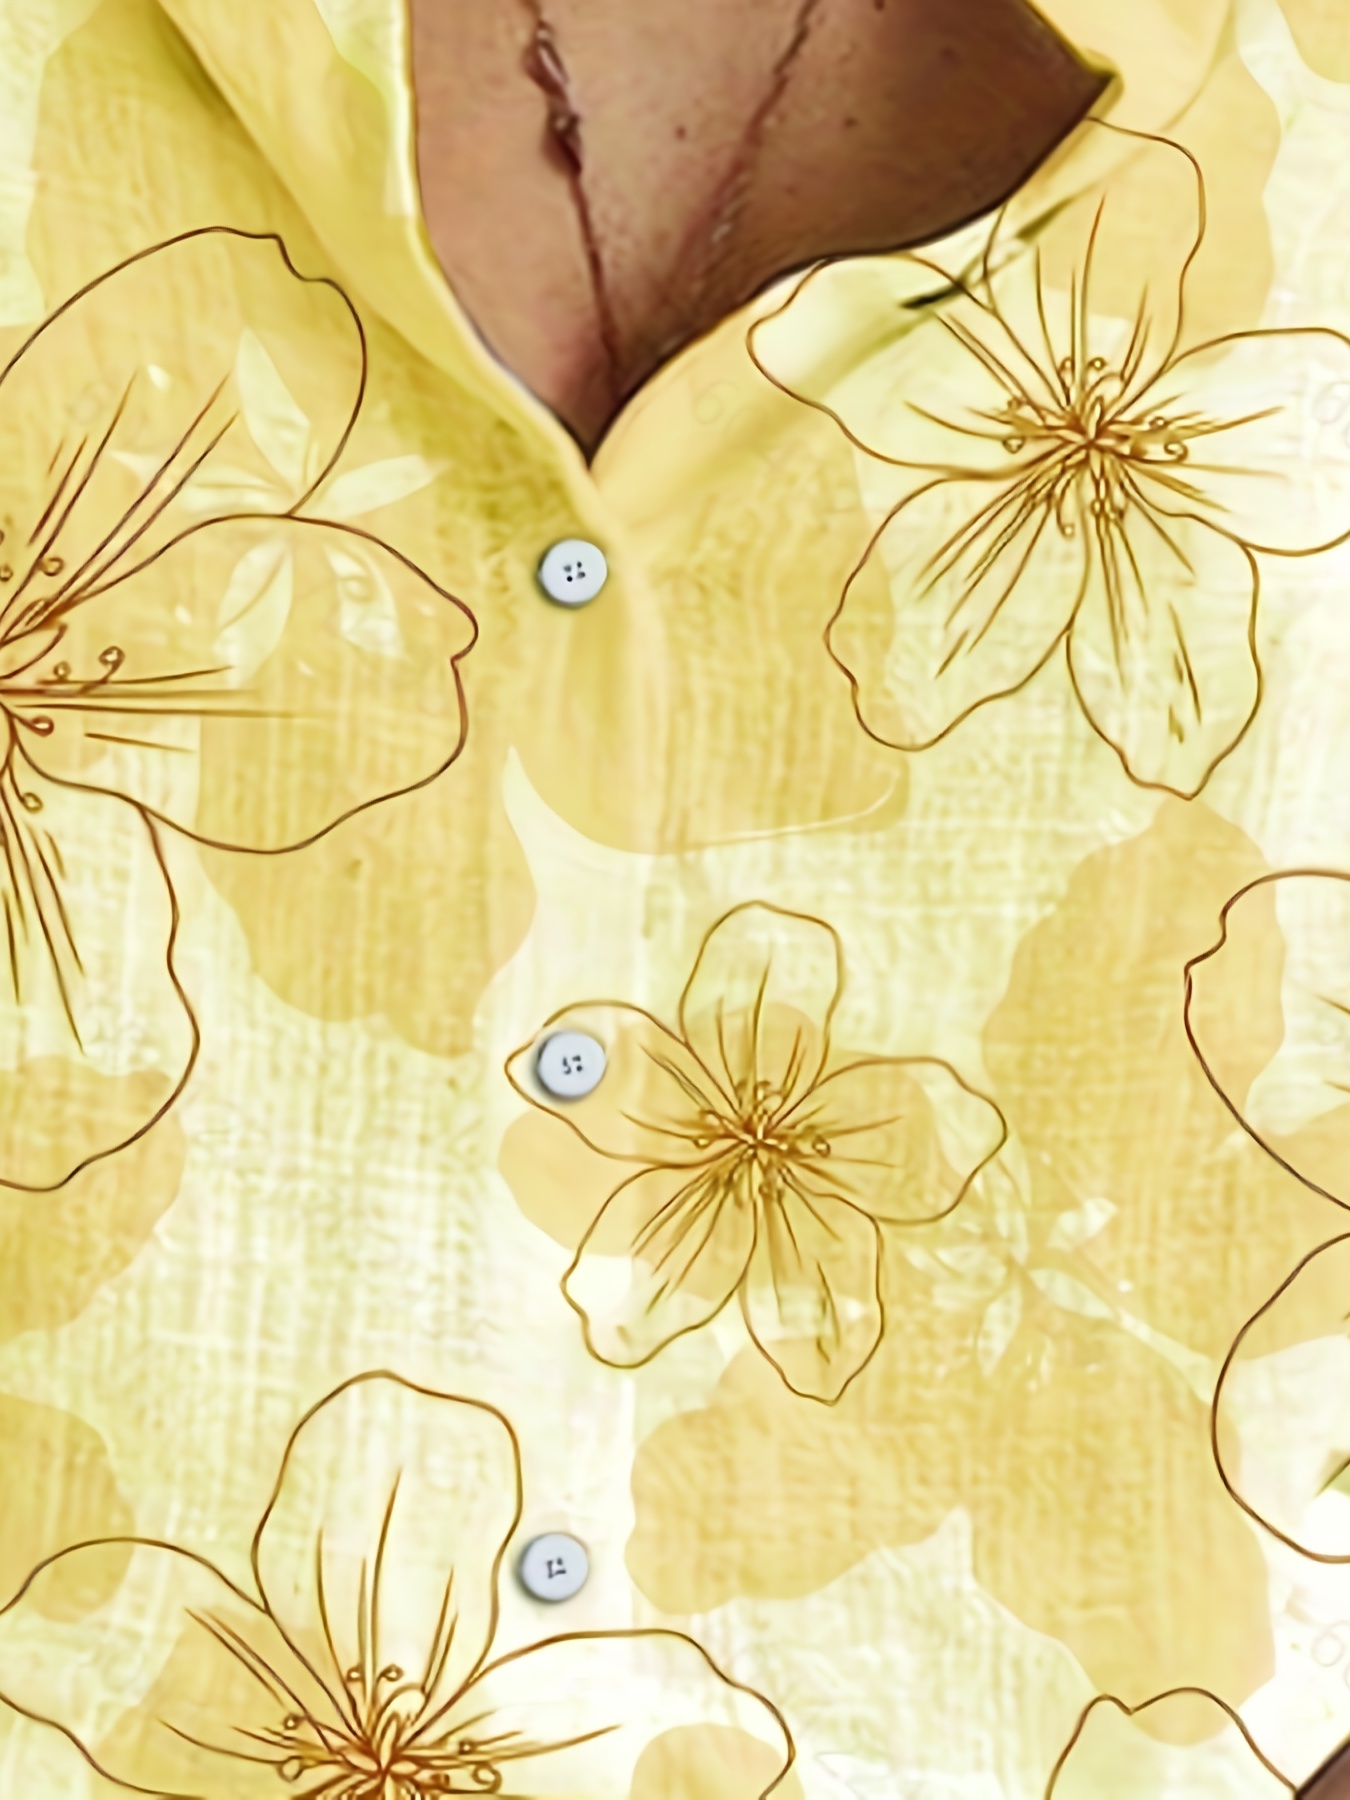 uhnmki Womens Button Up Shirt Spring Autumn Print Casual Comfort